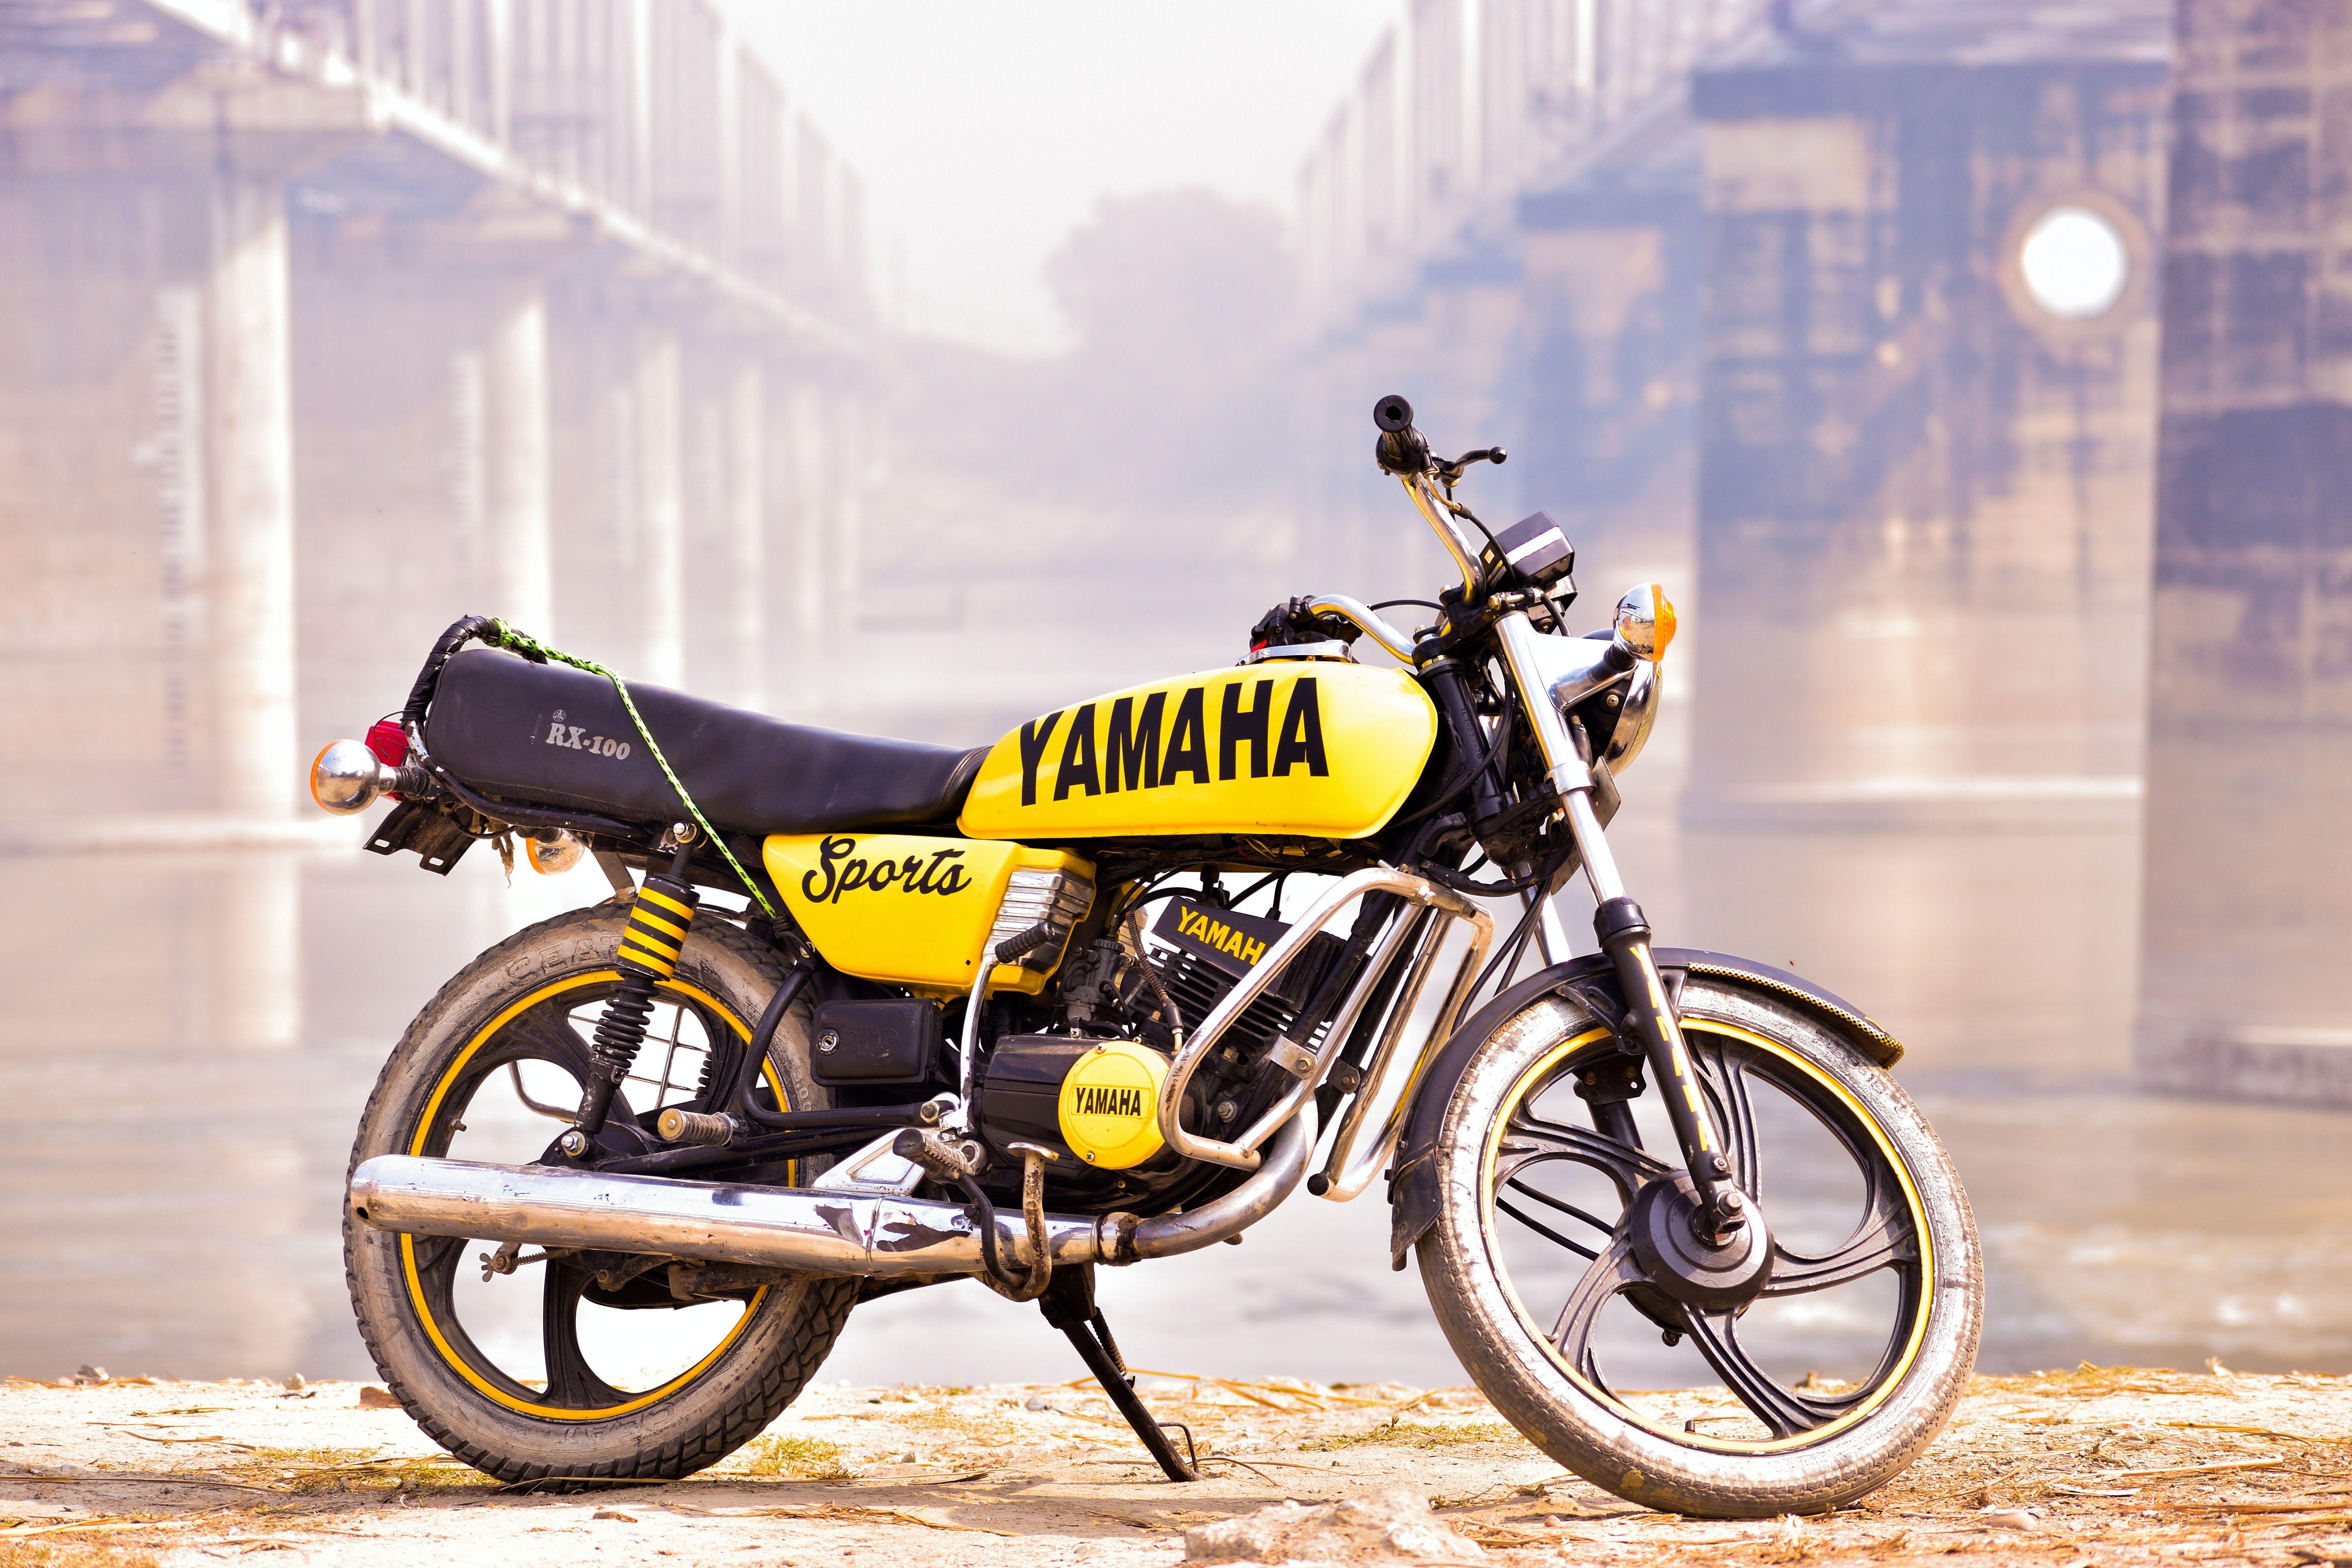 Yamaha Rx 100 Modified Yellow Colour